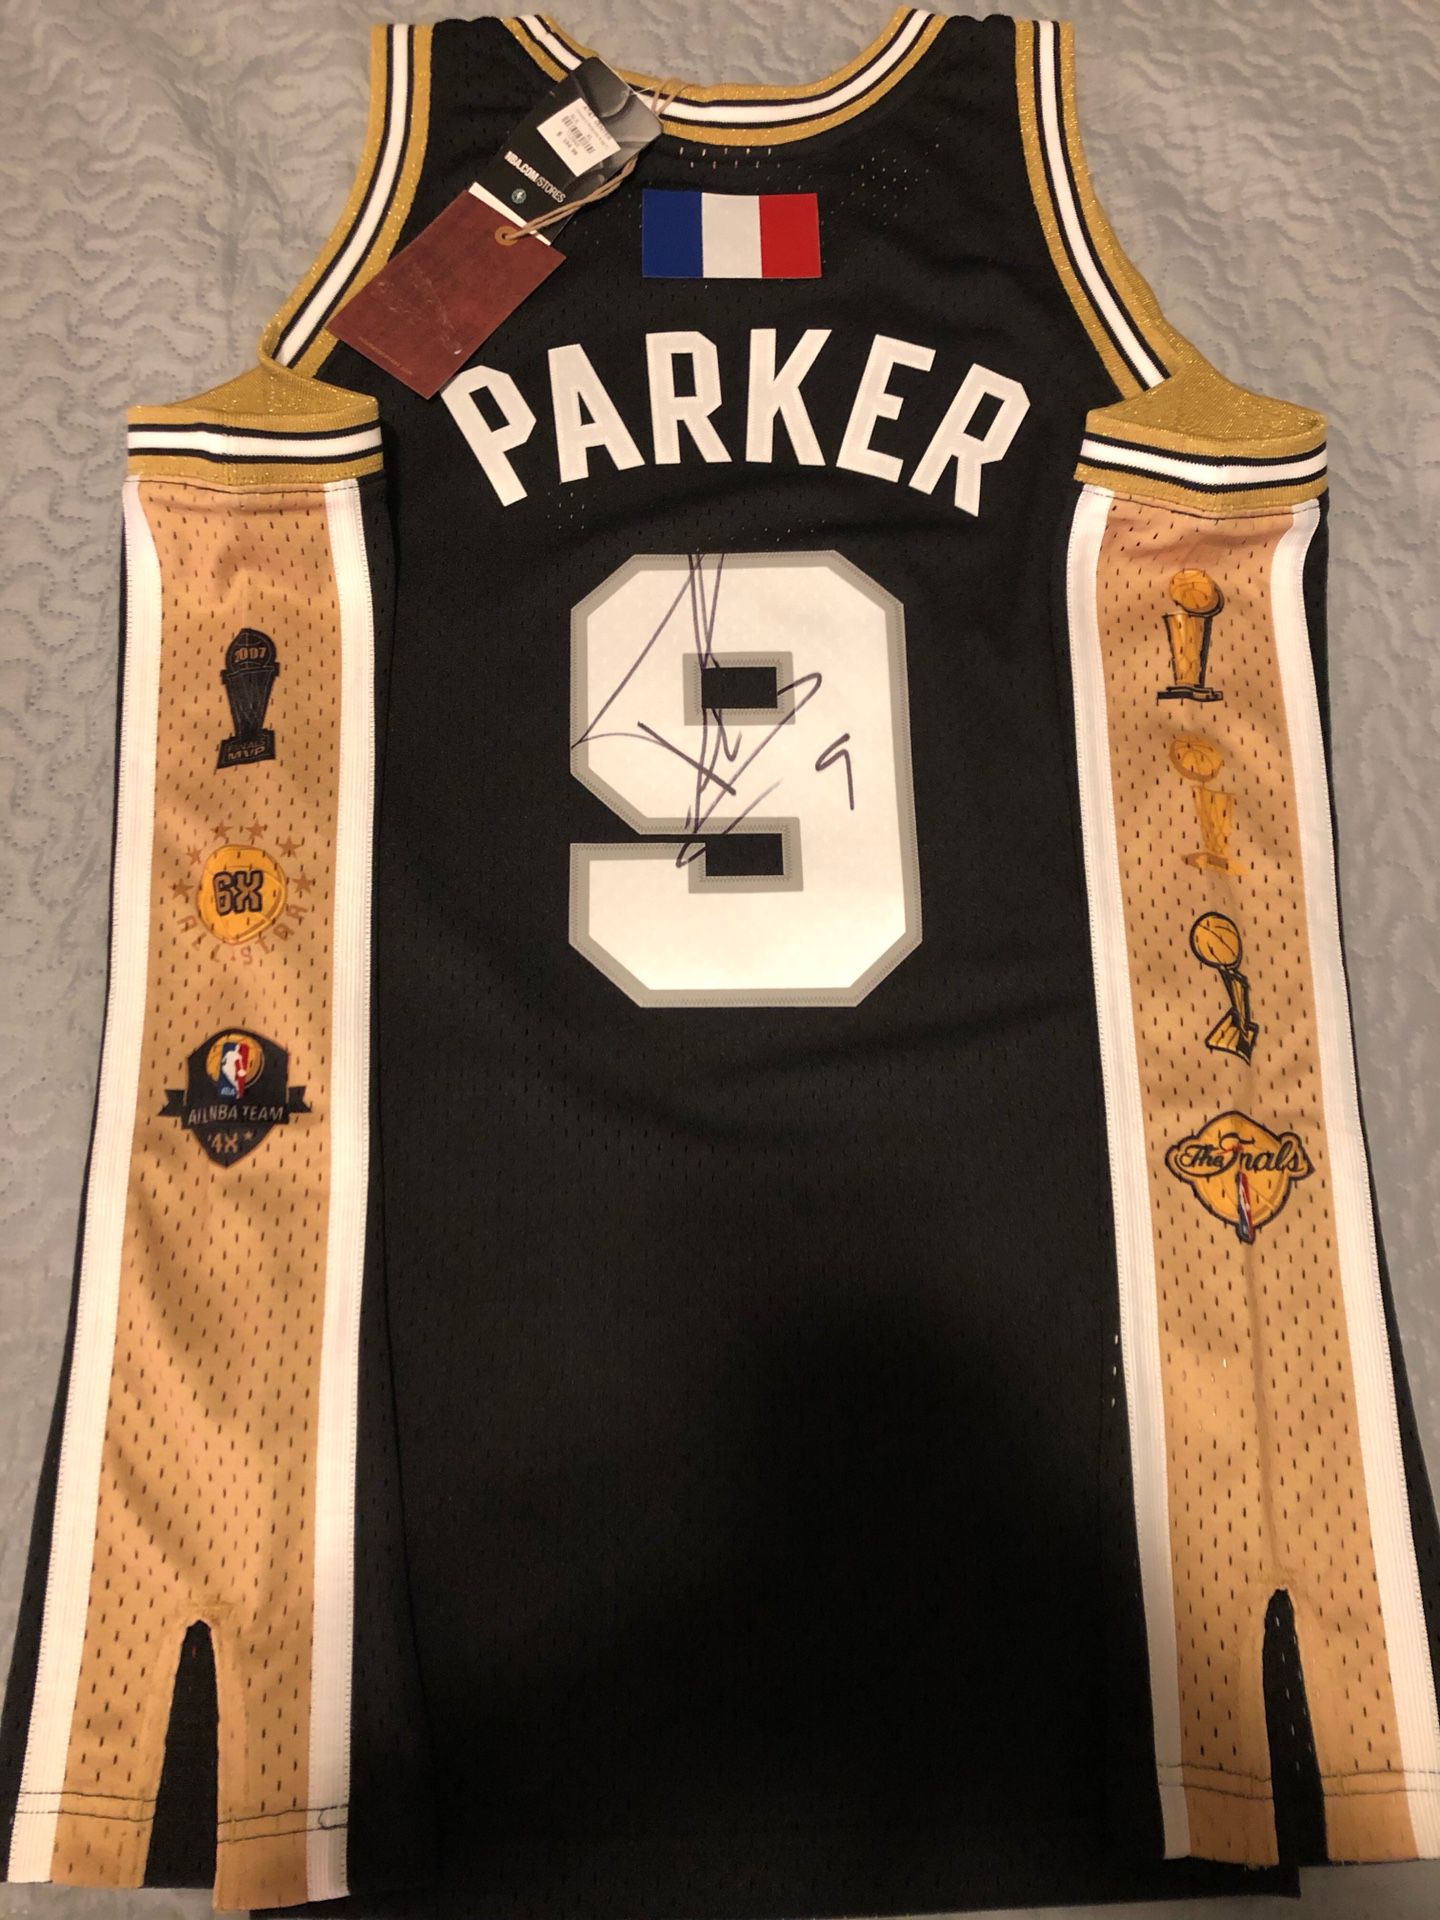 Tony Parker retirement jersey “ rare “ limited